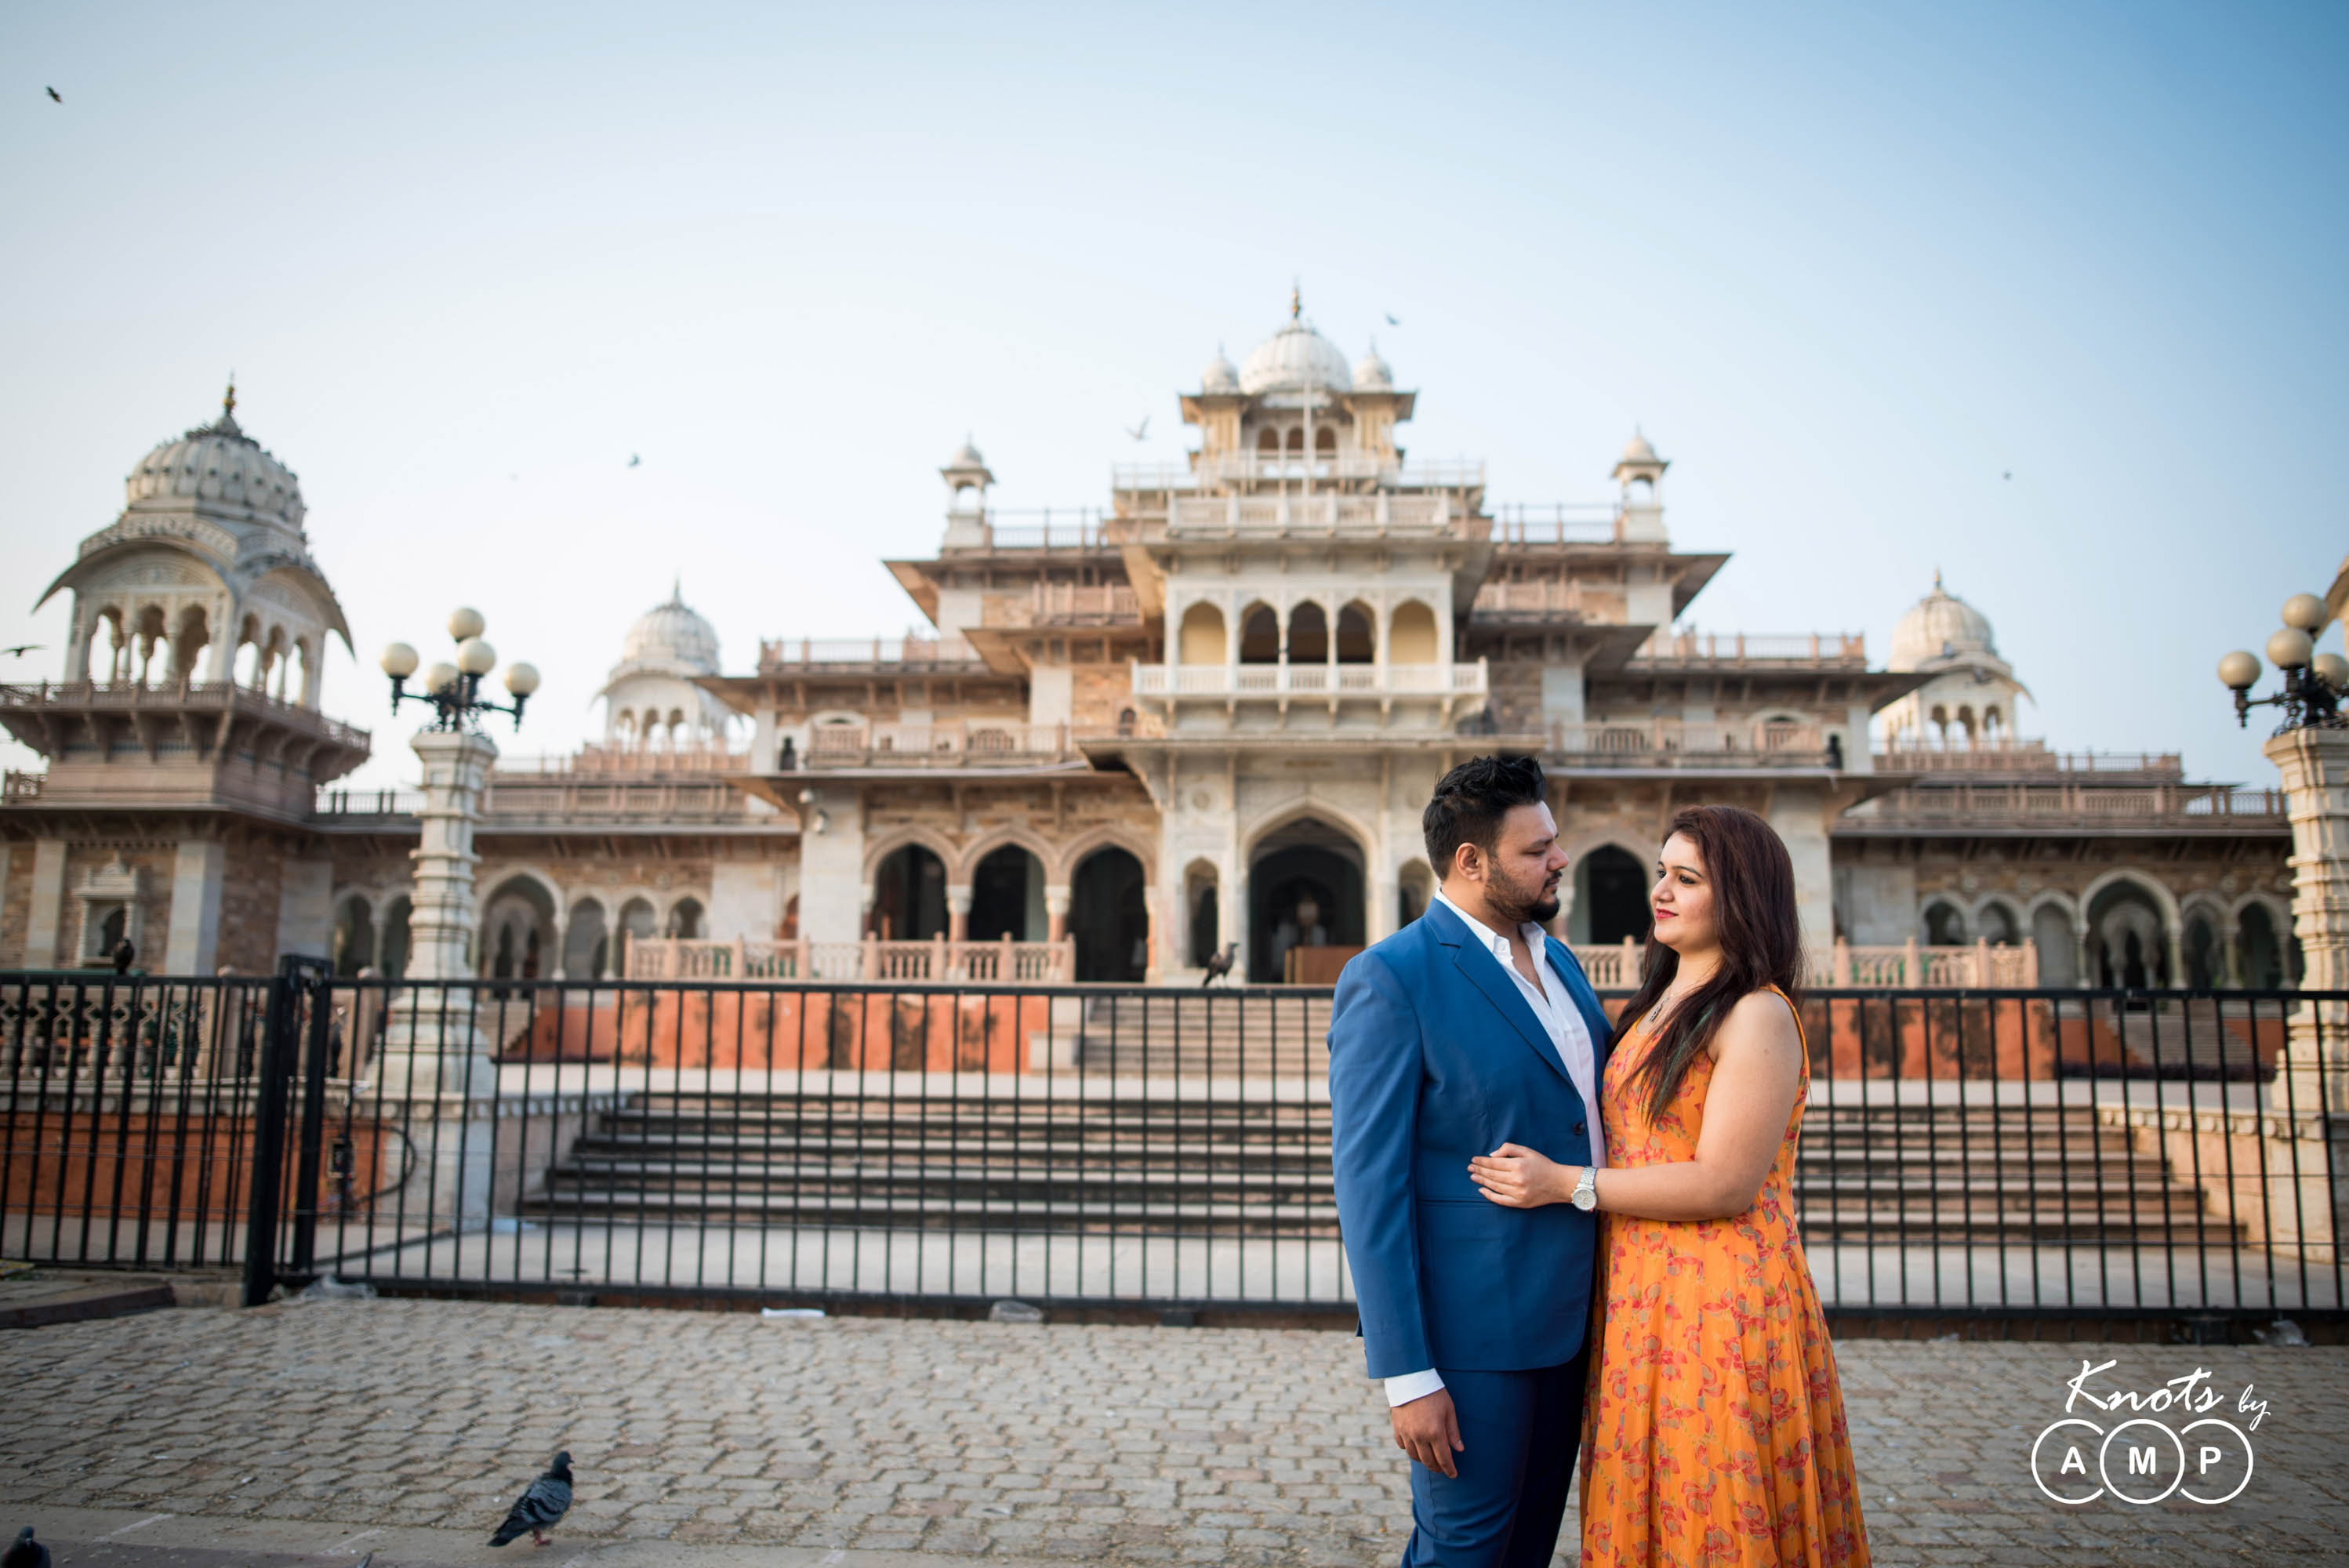 Couple Shoot In Jaipur Best Wedding Photographers In India Knotsbyamp 6084